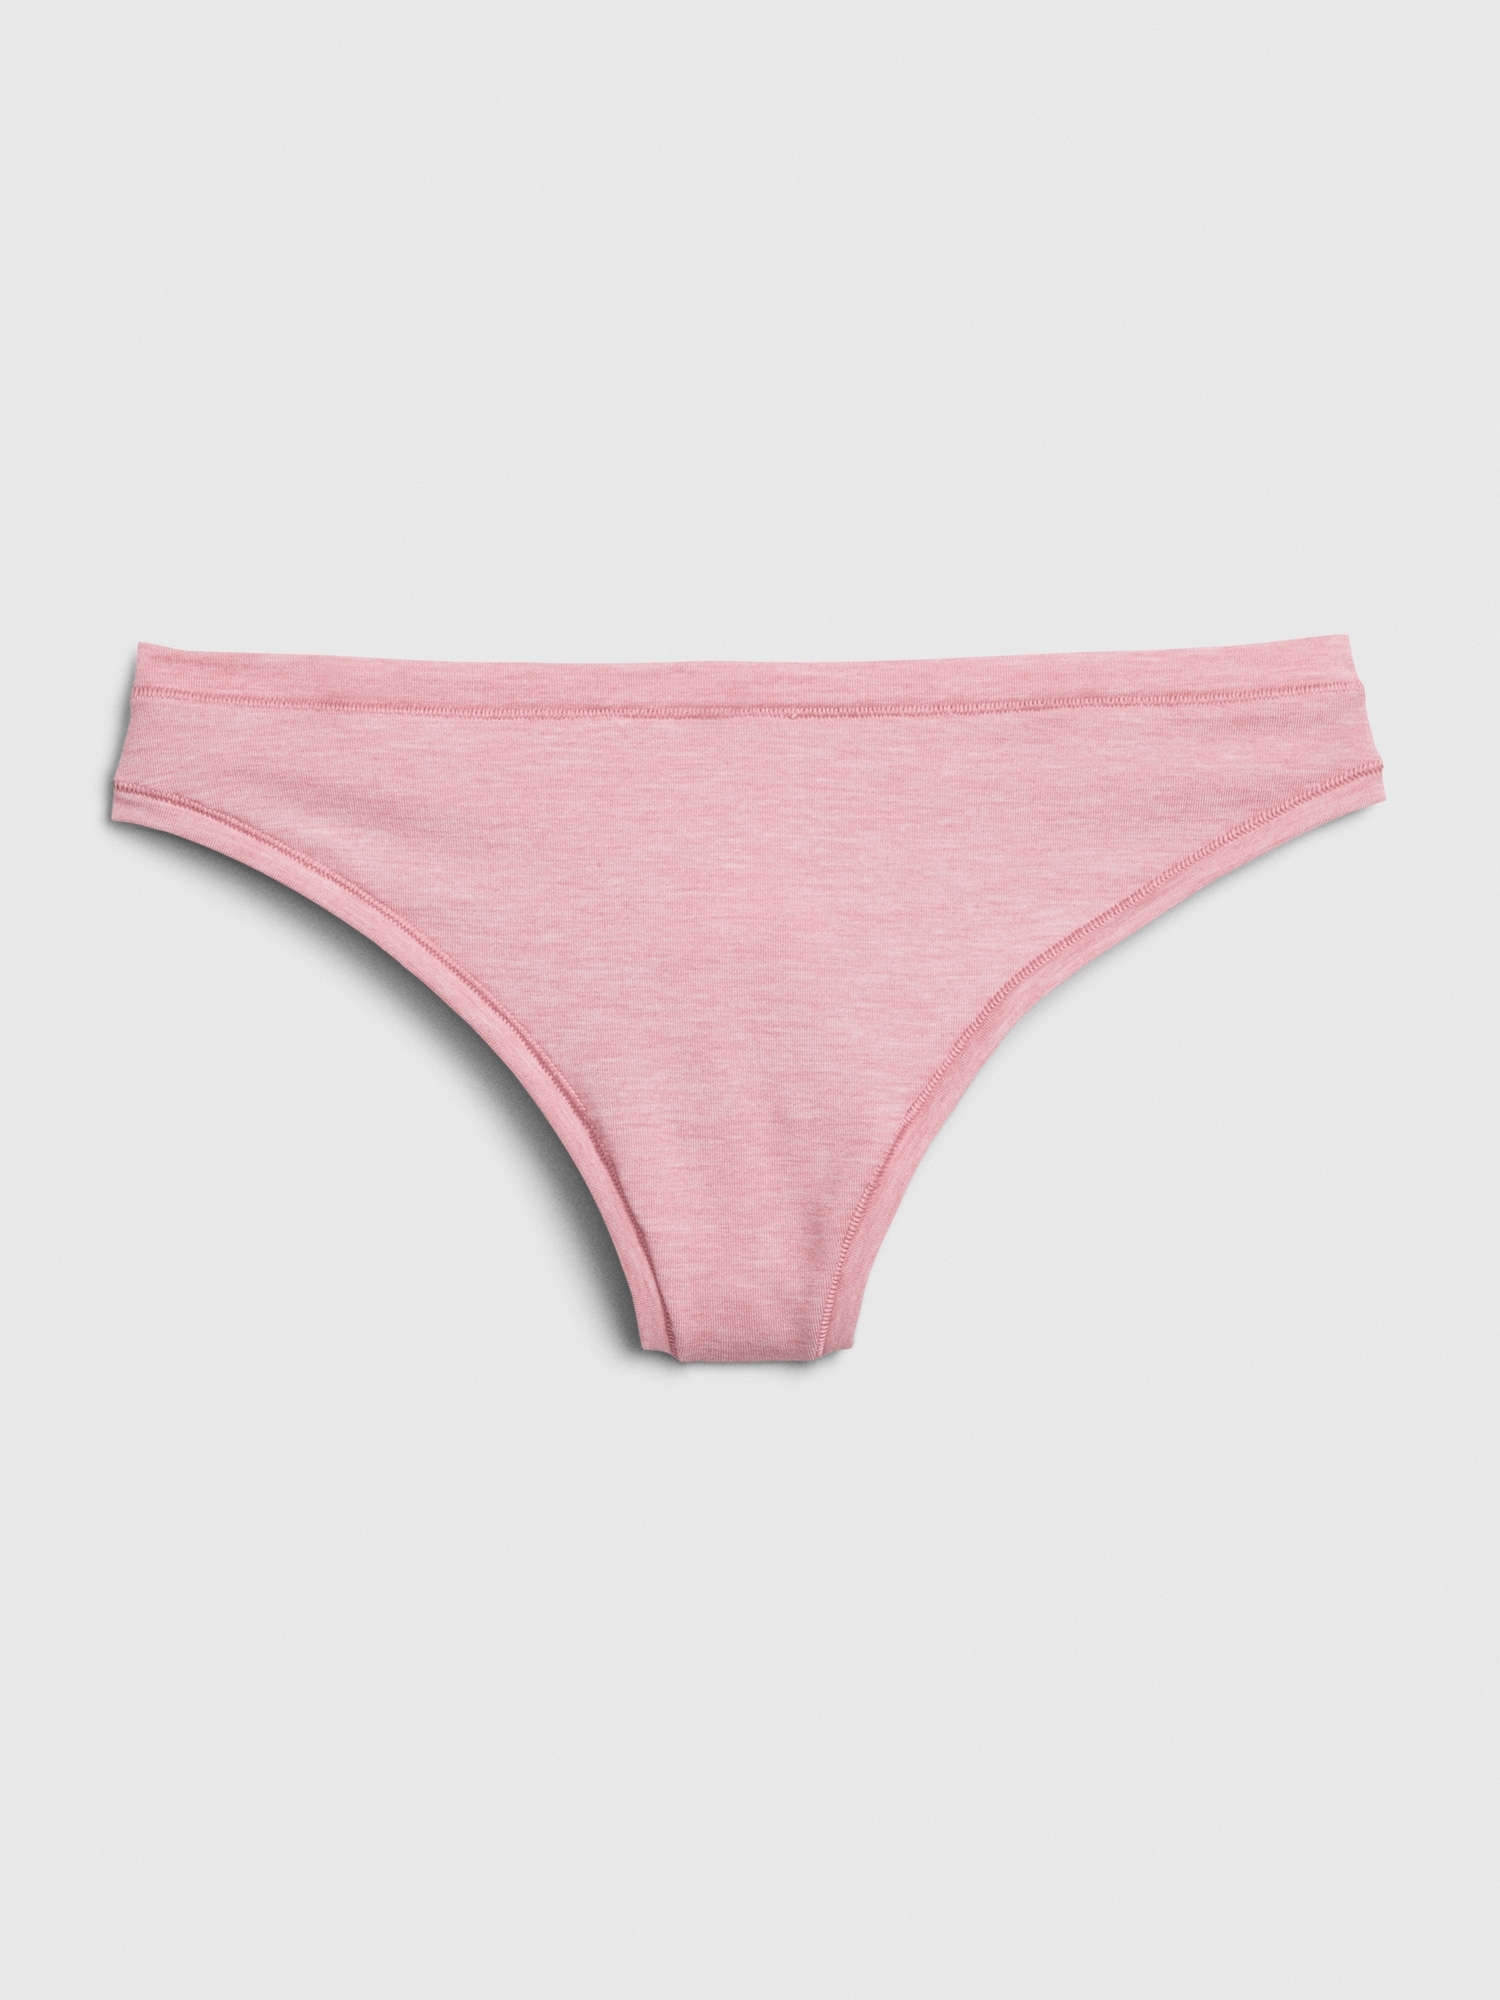 GAP Women's 3-Pack Breathe Thong Underpants Underwear